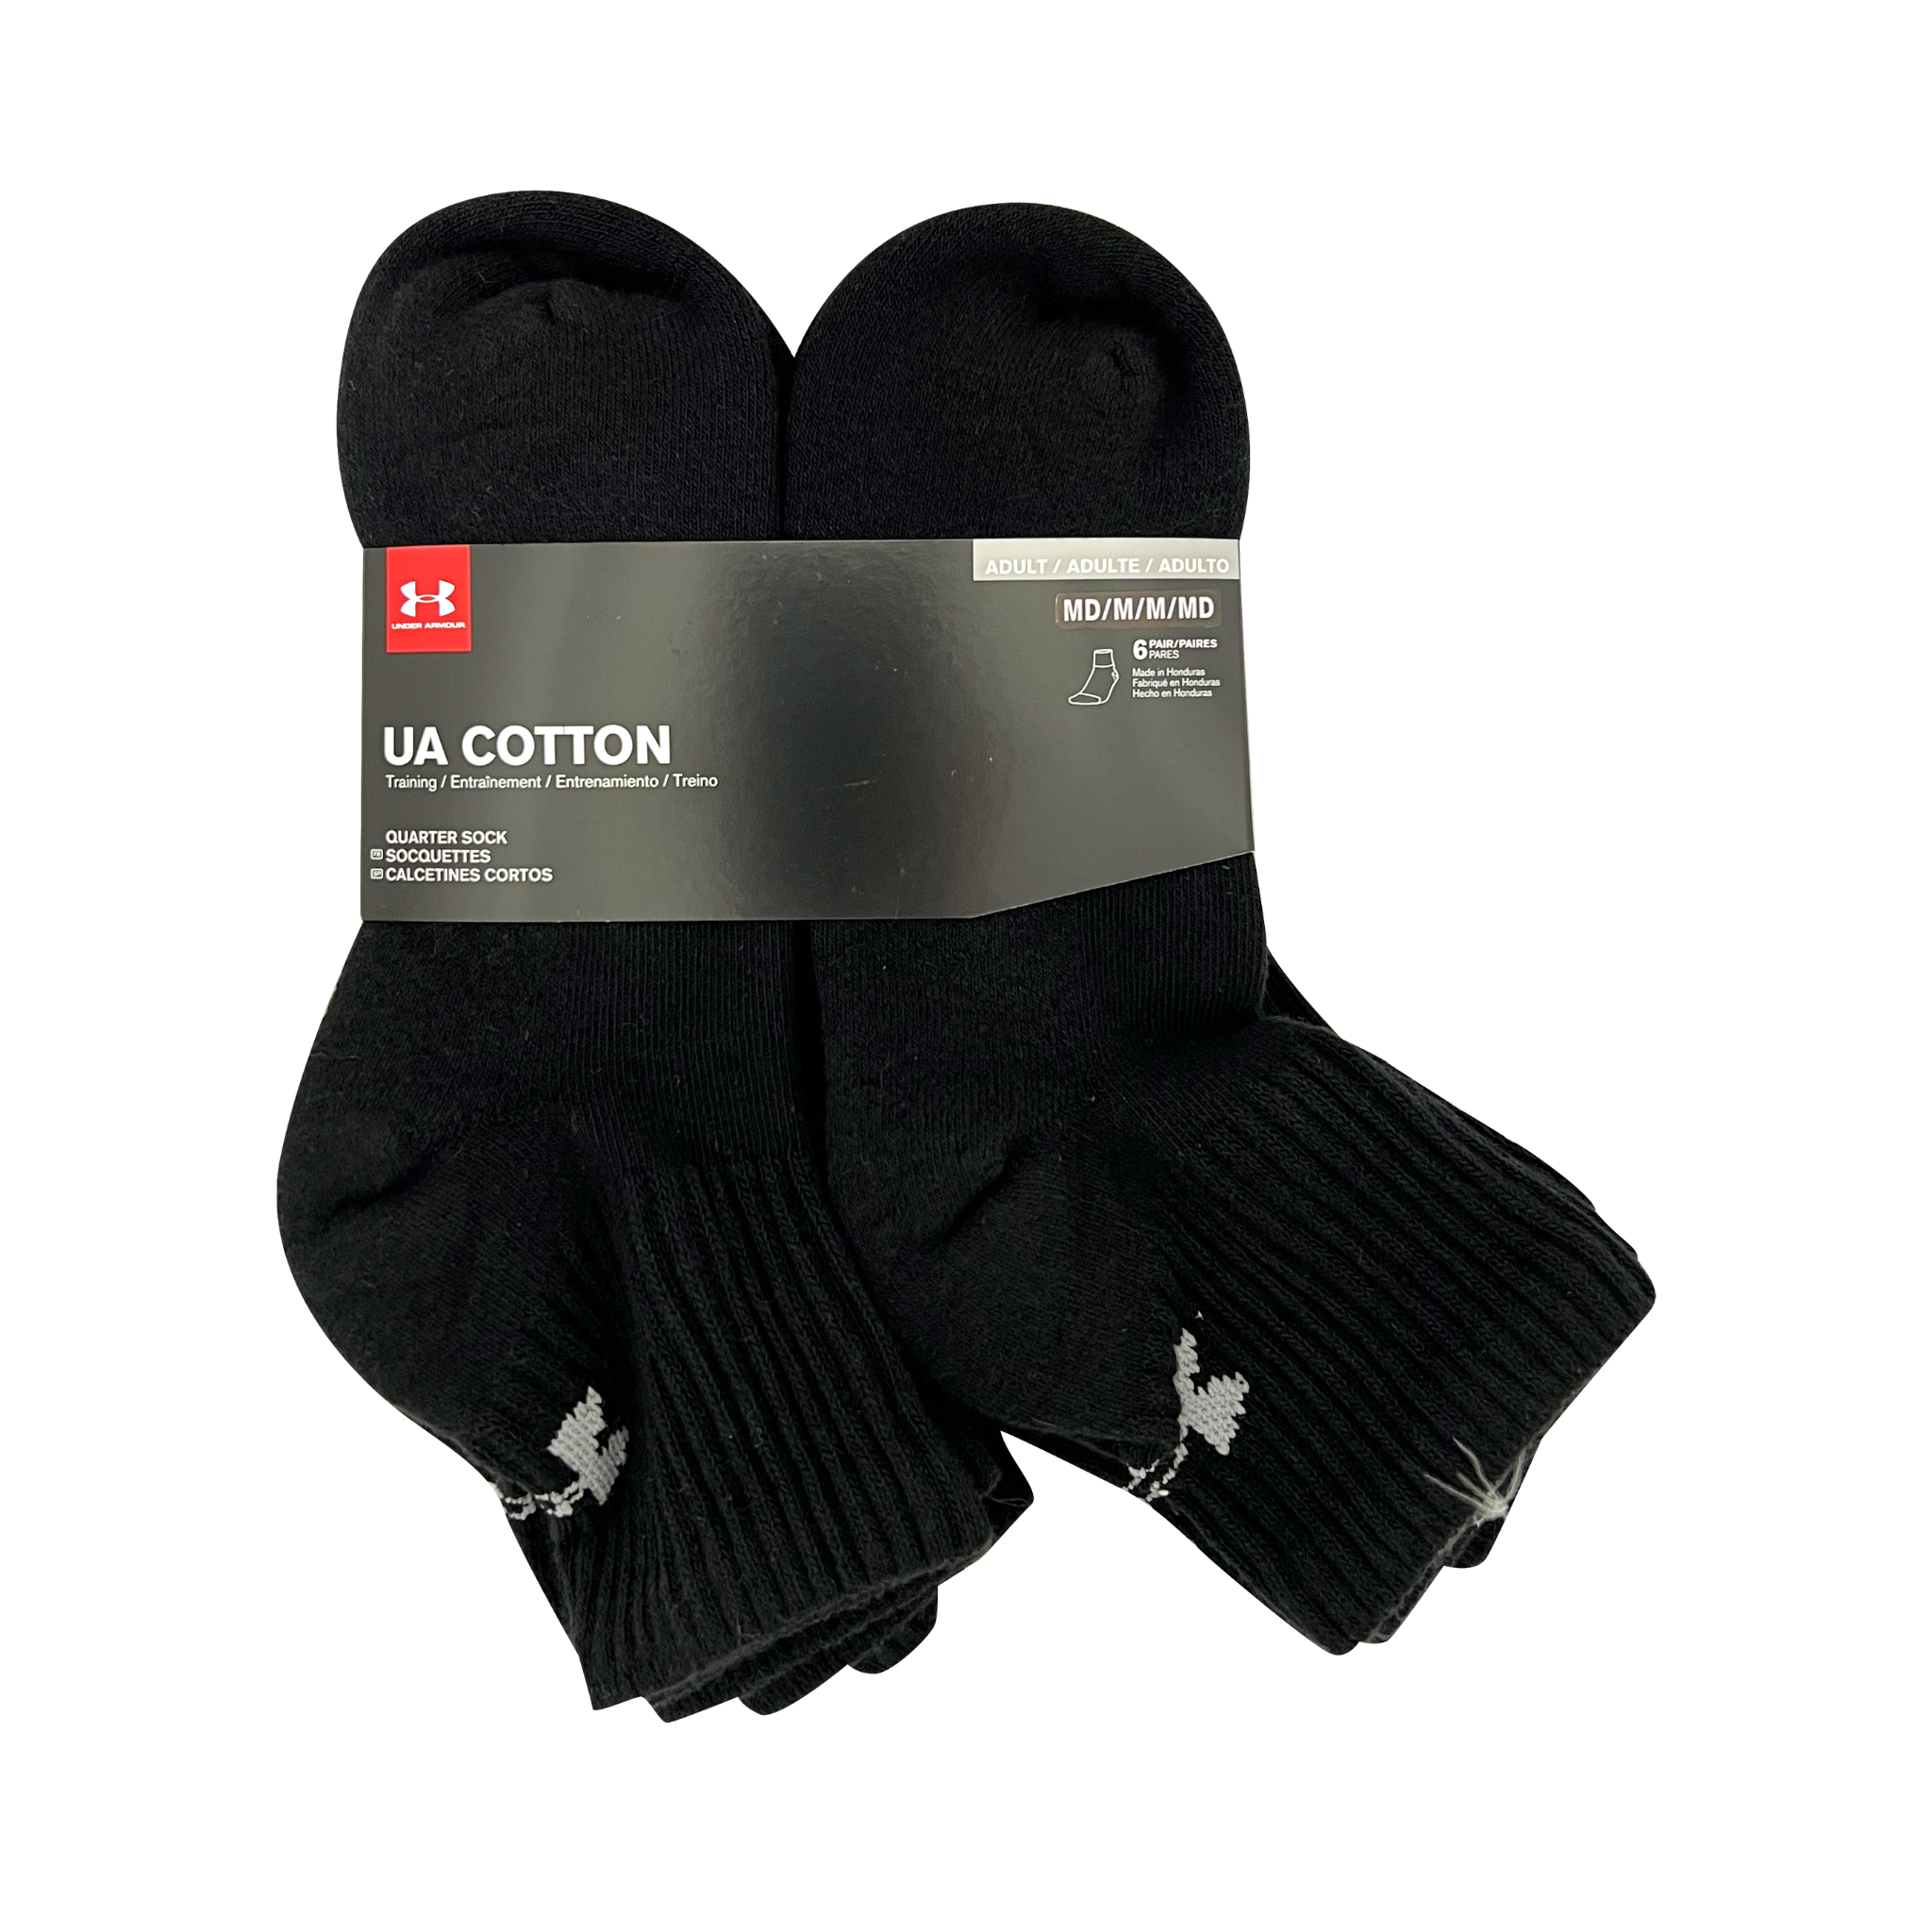 Under Armour Cotton Quarter Socks 6pair Black -